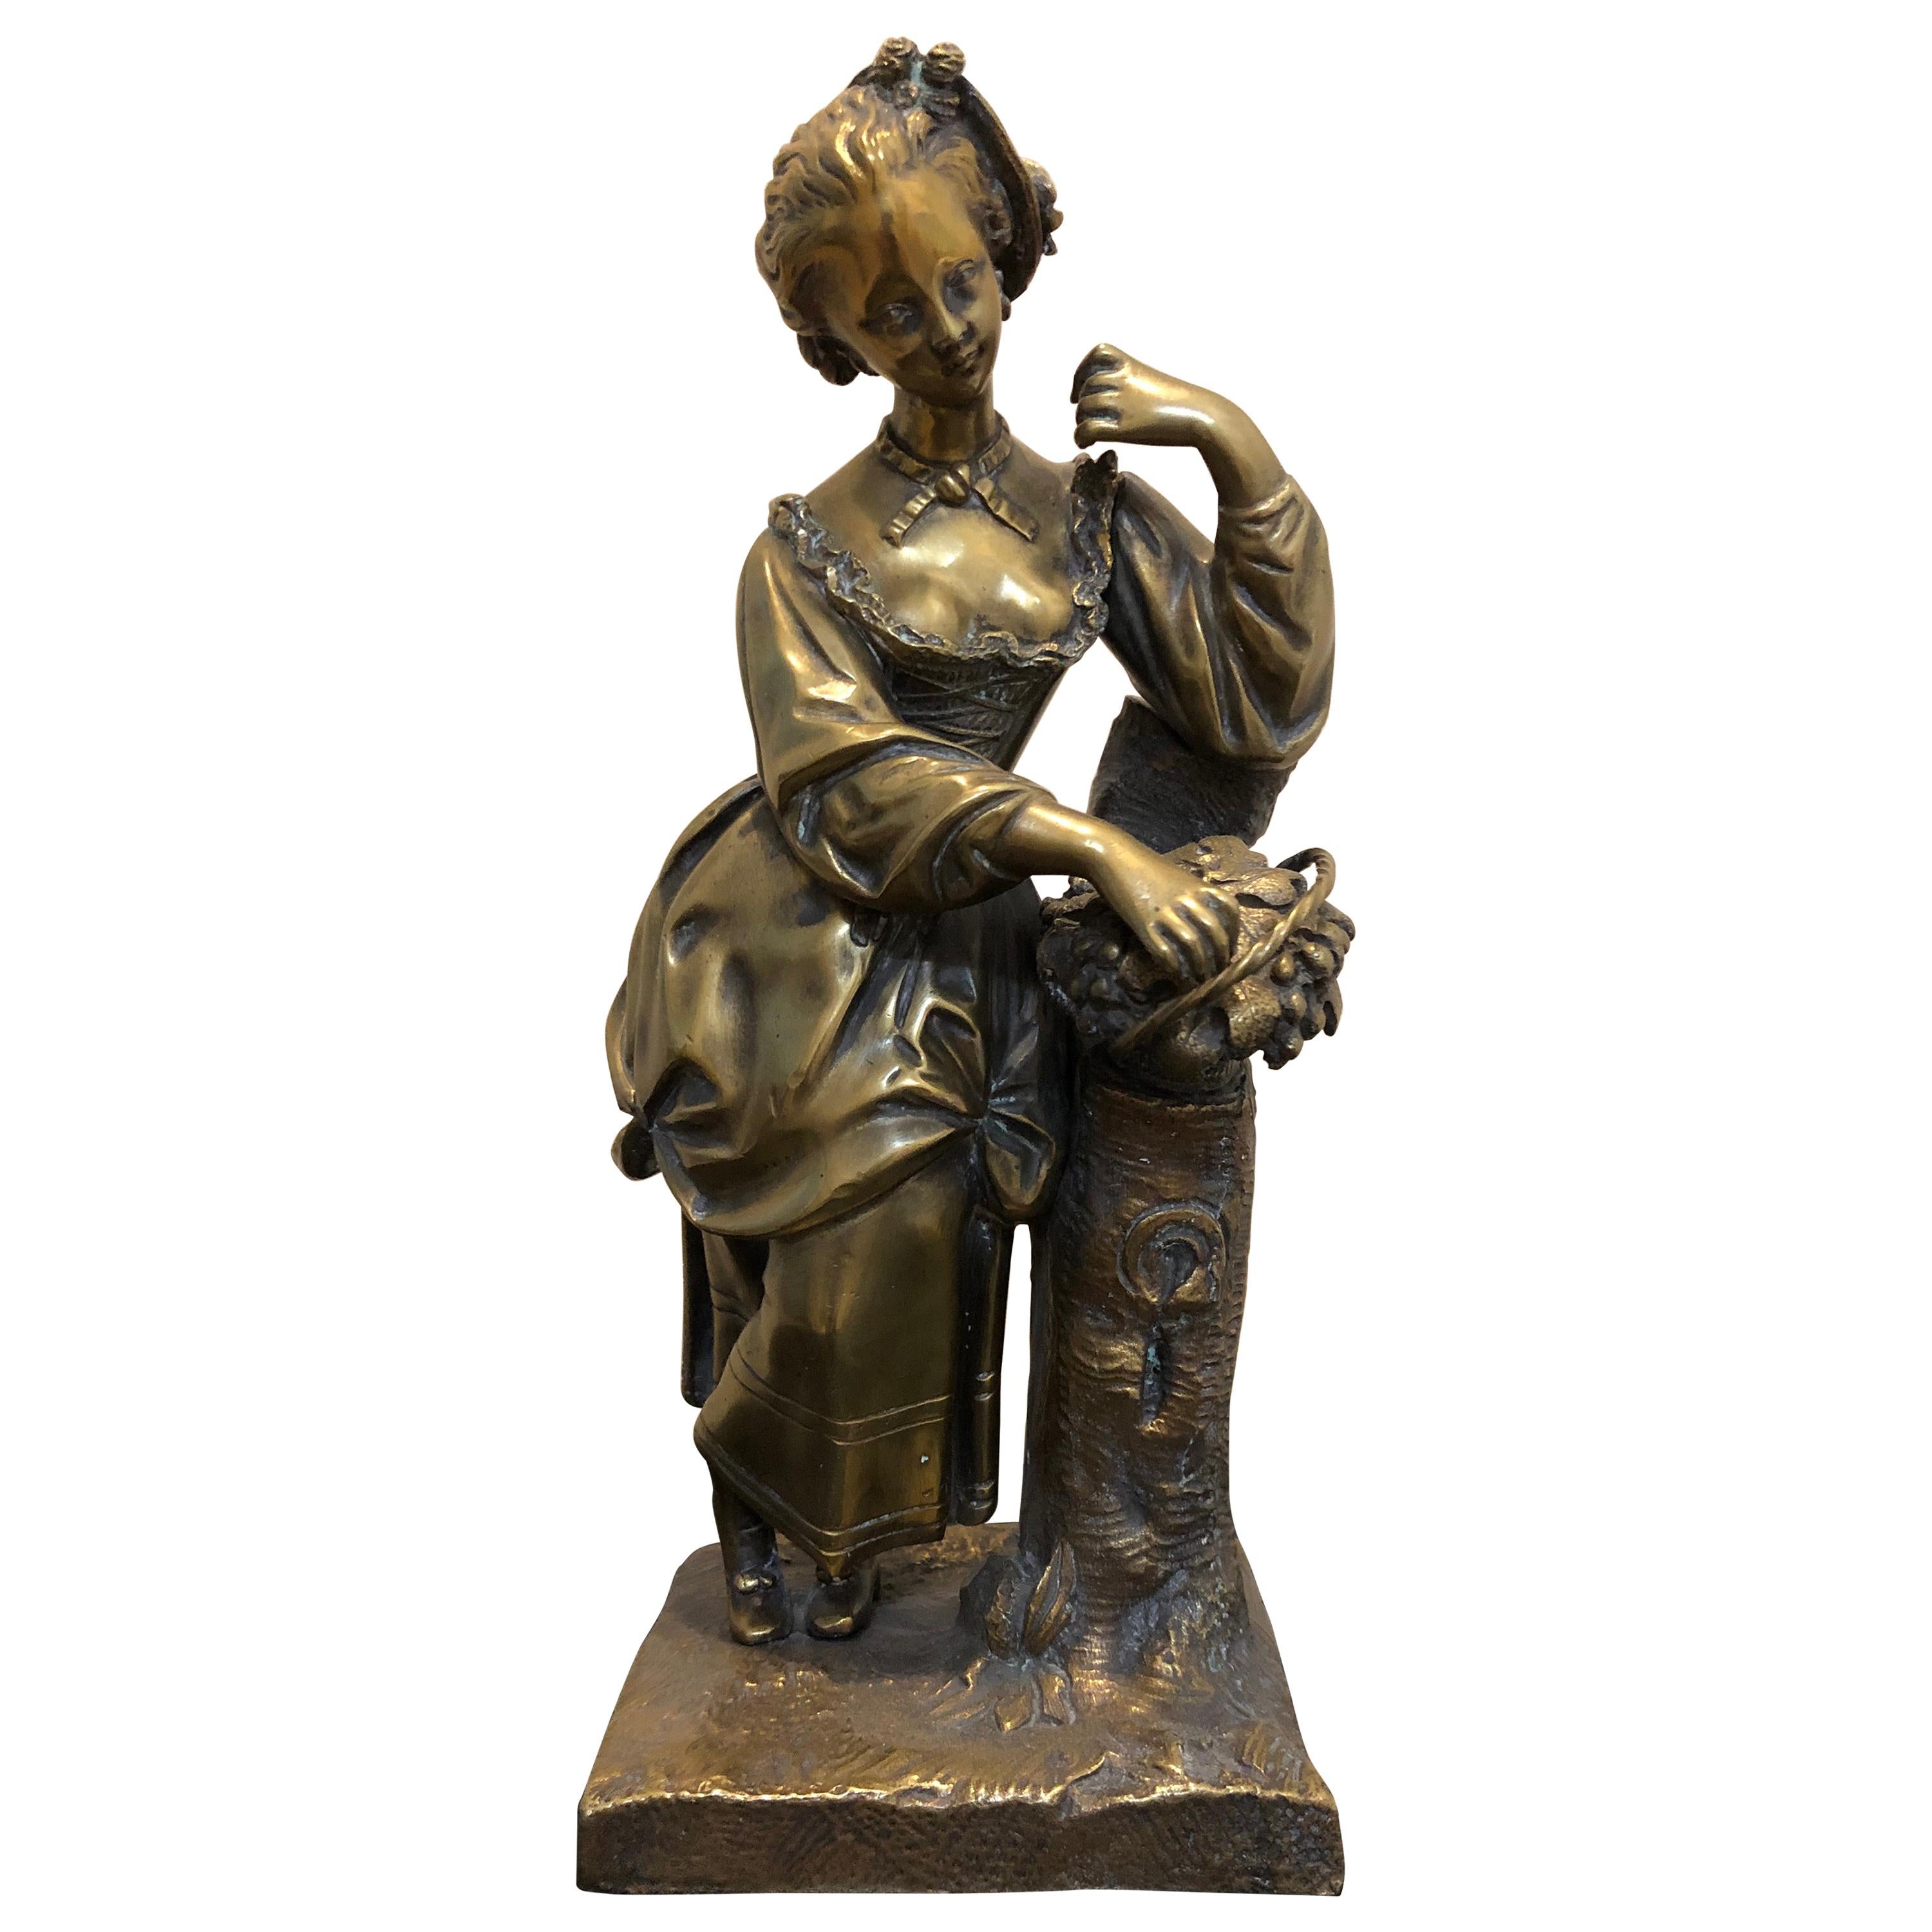 Dame en bronze du 19e siècle